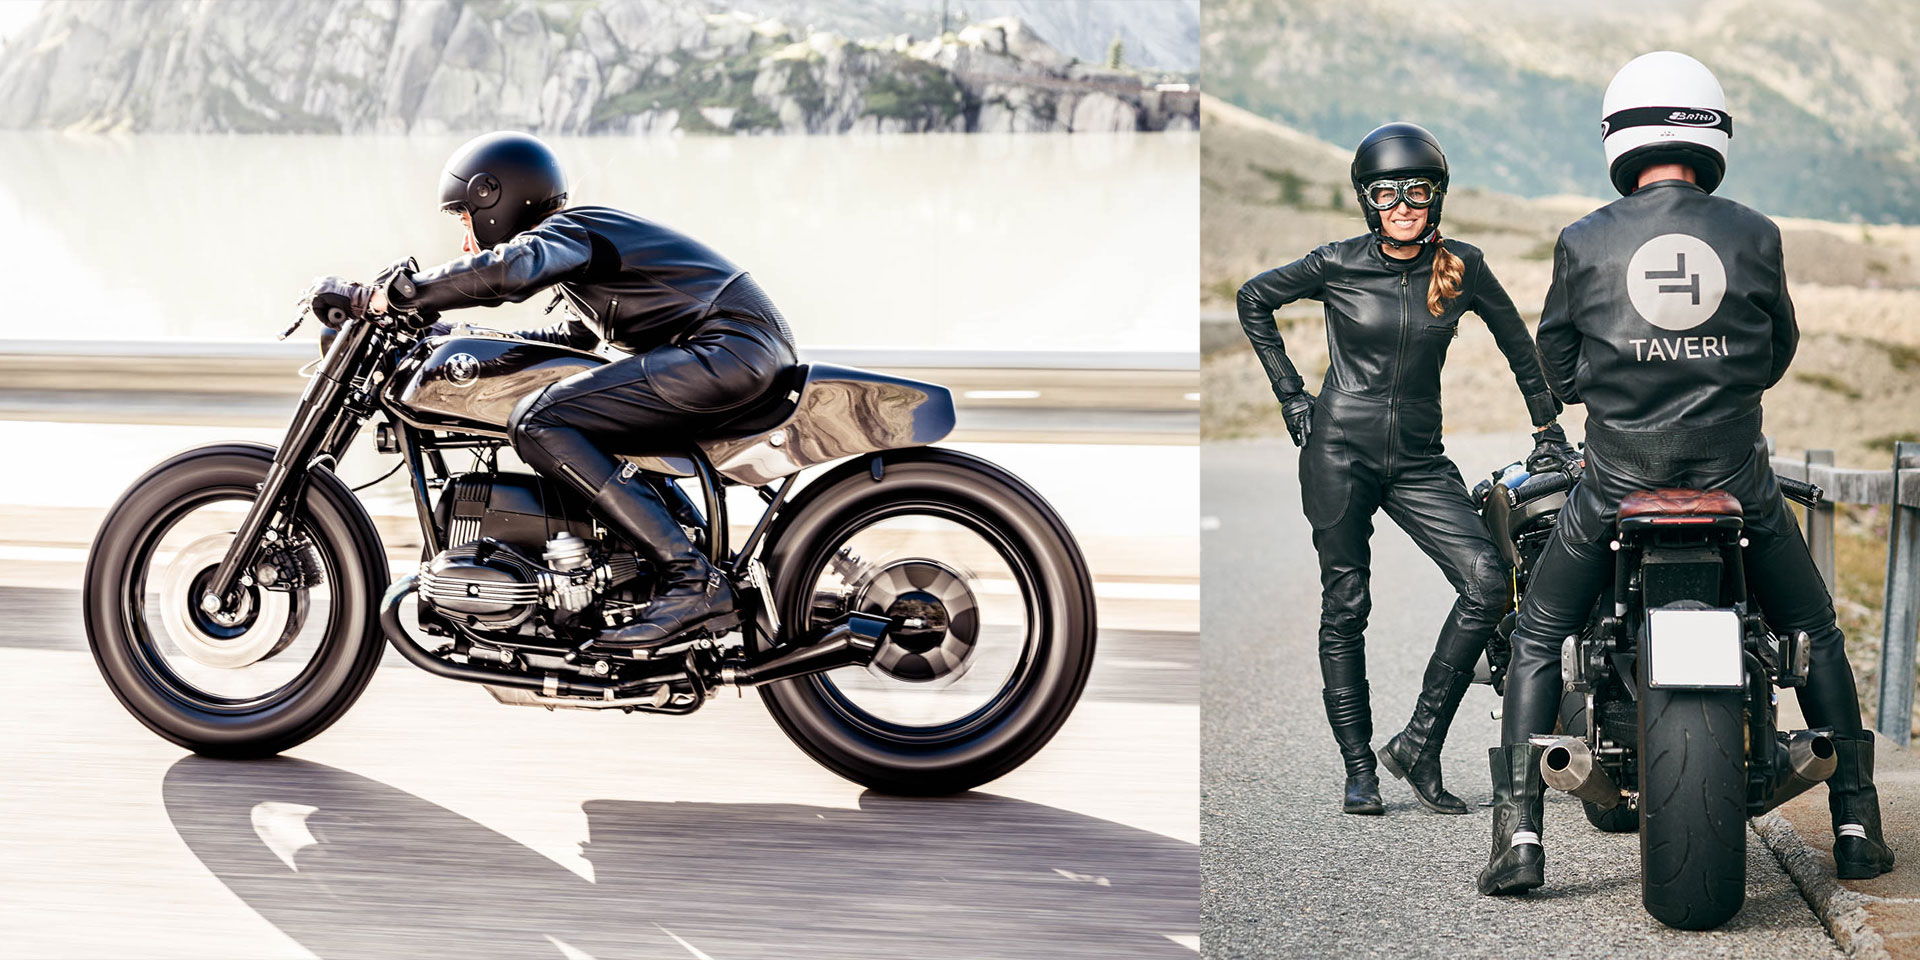 01 milani design consulting agency Taveri moto motorbike luigi taveri fashion leather startup